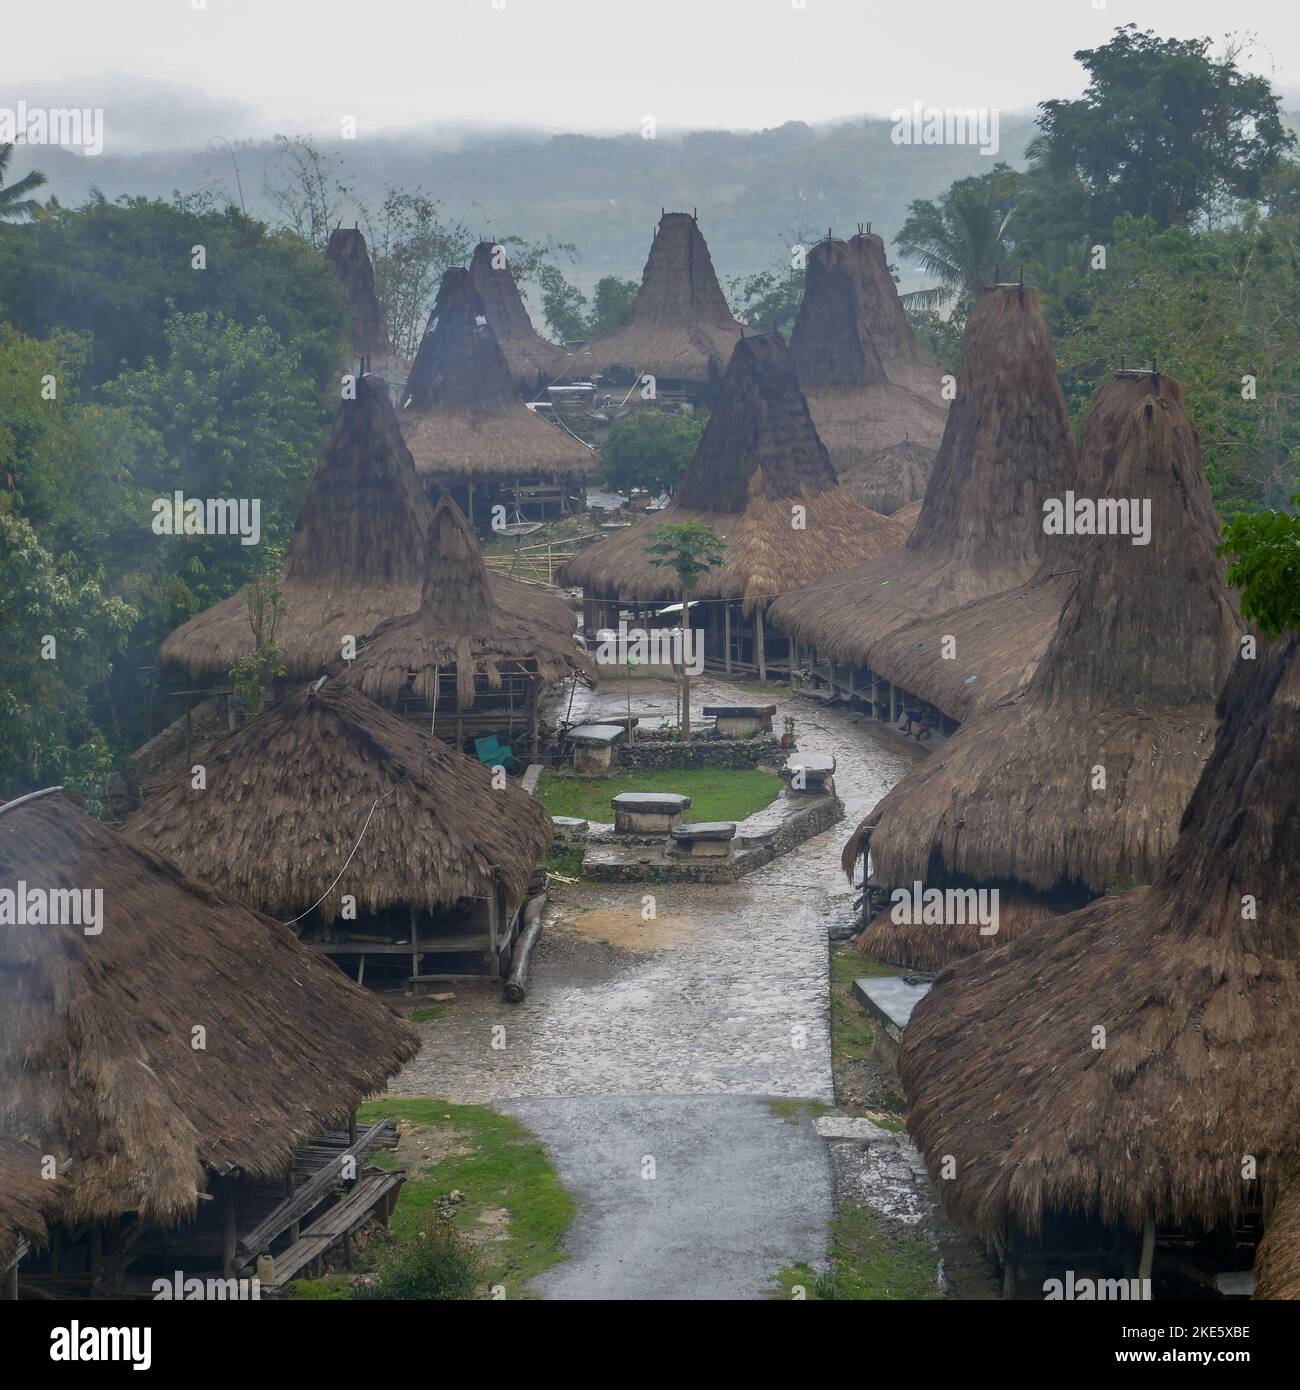 Landscape view of Prai Ijing traditional village on a rainy overcast day, Waikabubak, Sumba island, East Nusa Tenggara, Indonesia Stock Photo